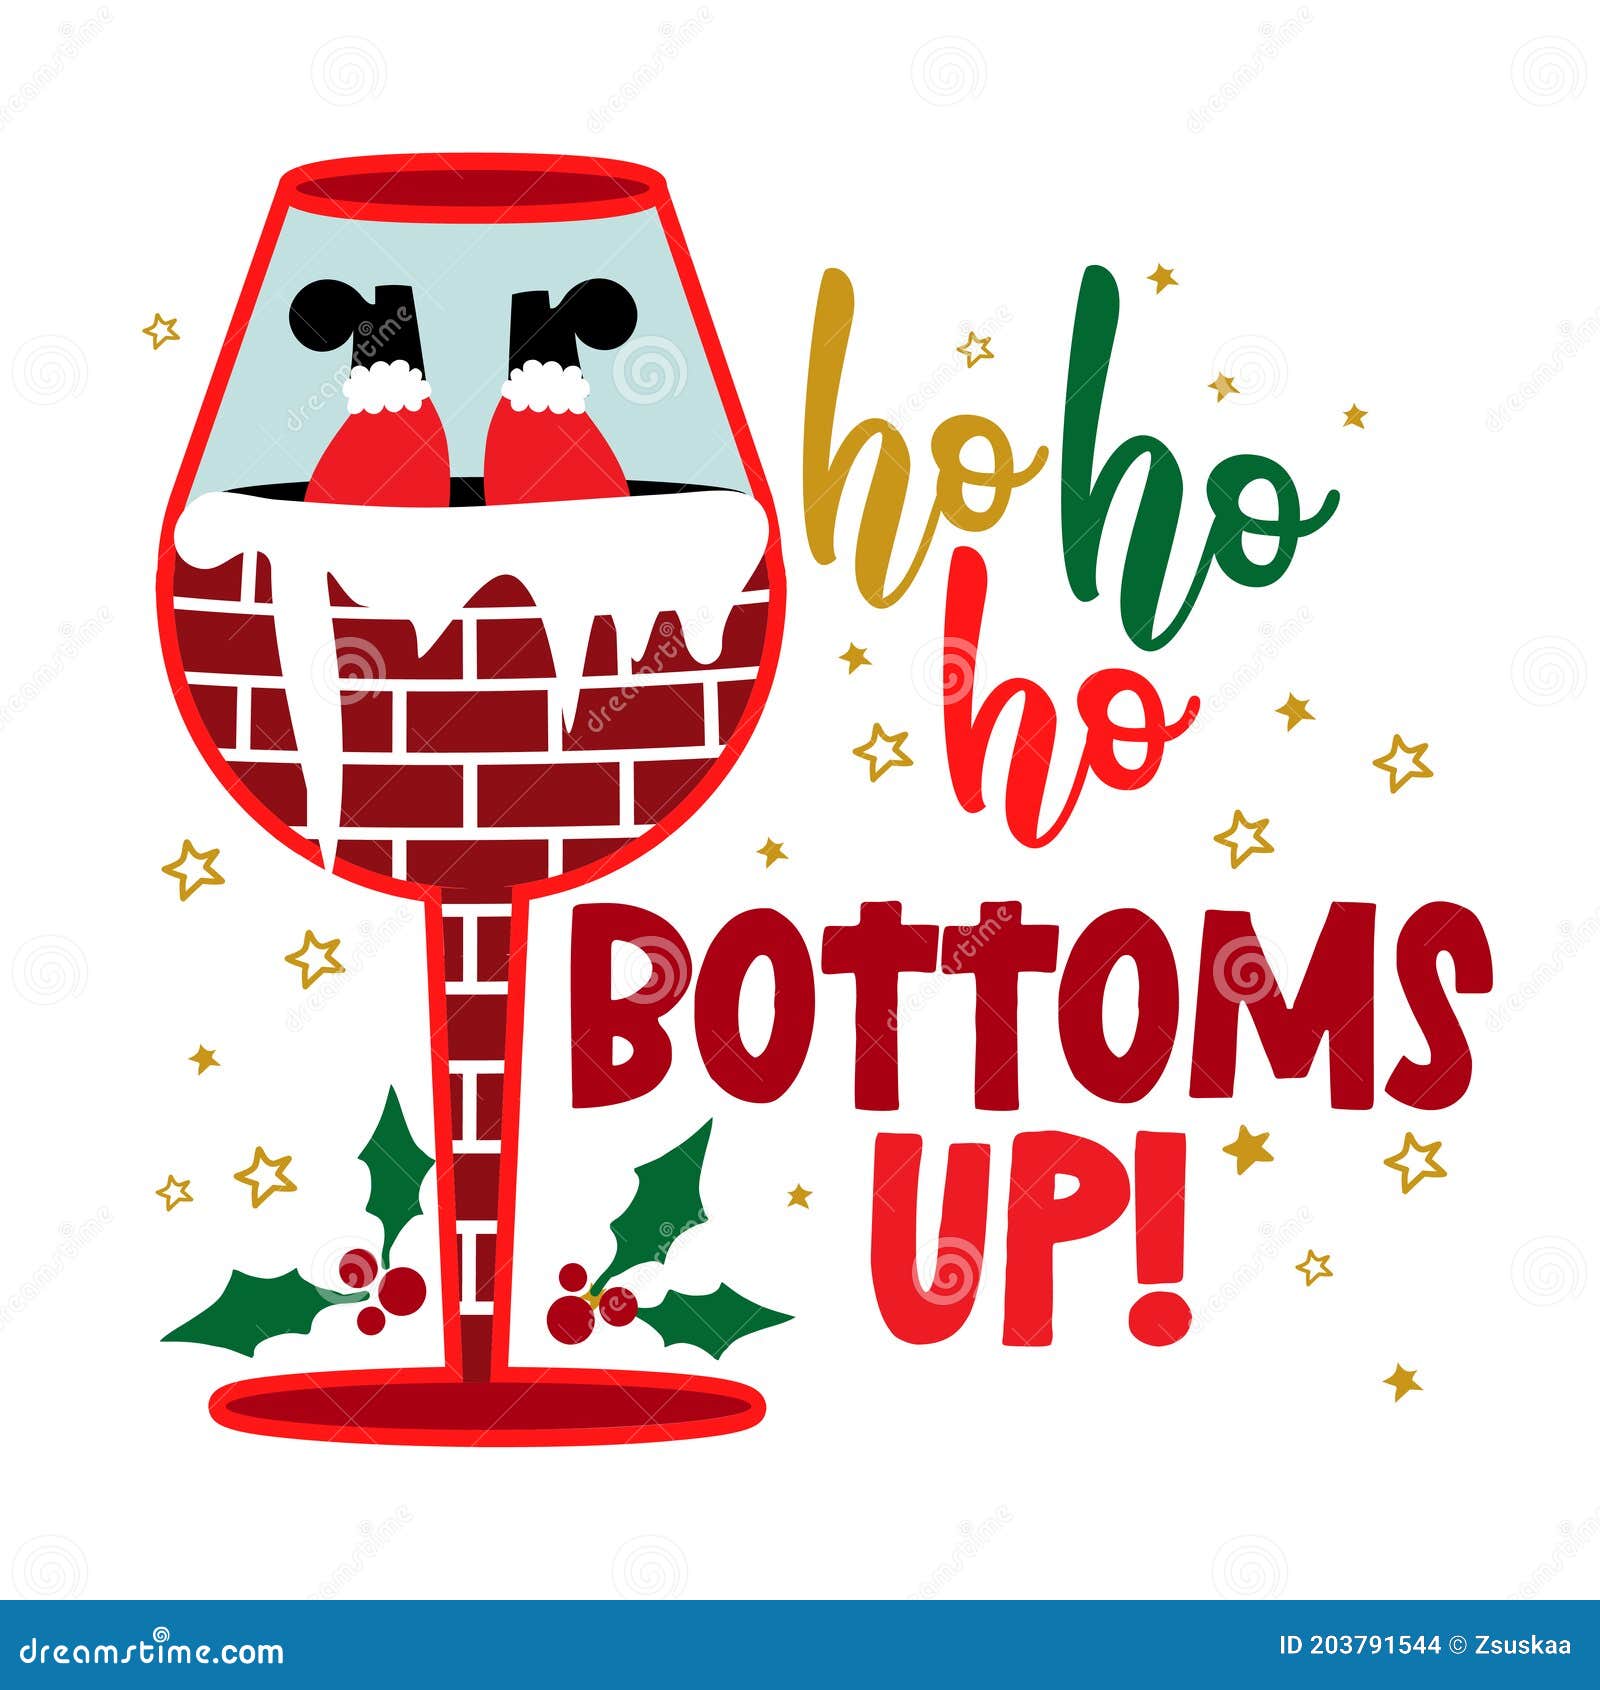 ho ho ho bottoms up - calligraphy phrase for christmas.